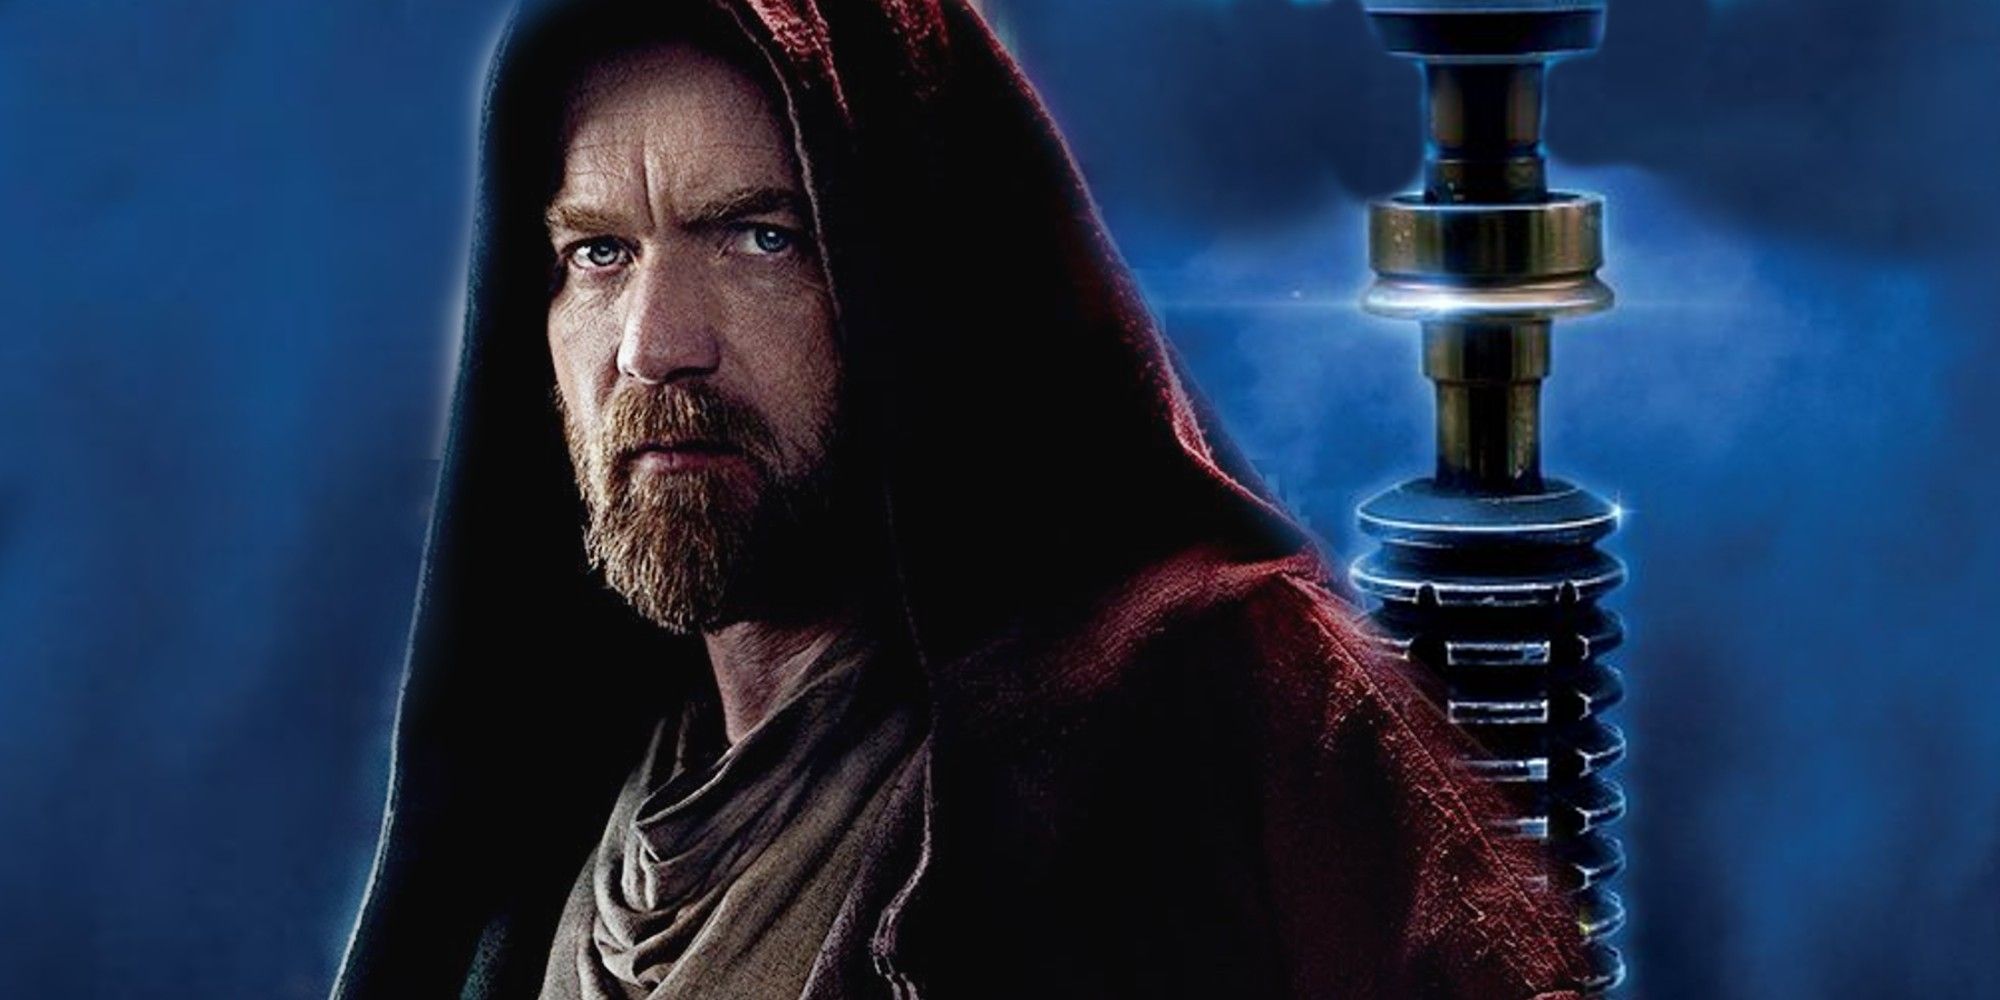 Obi-Wan Kenobi Characters’ Lightsabers Revealed In New Posters